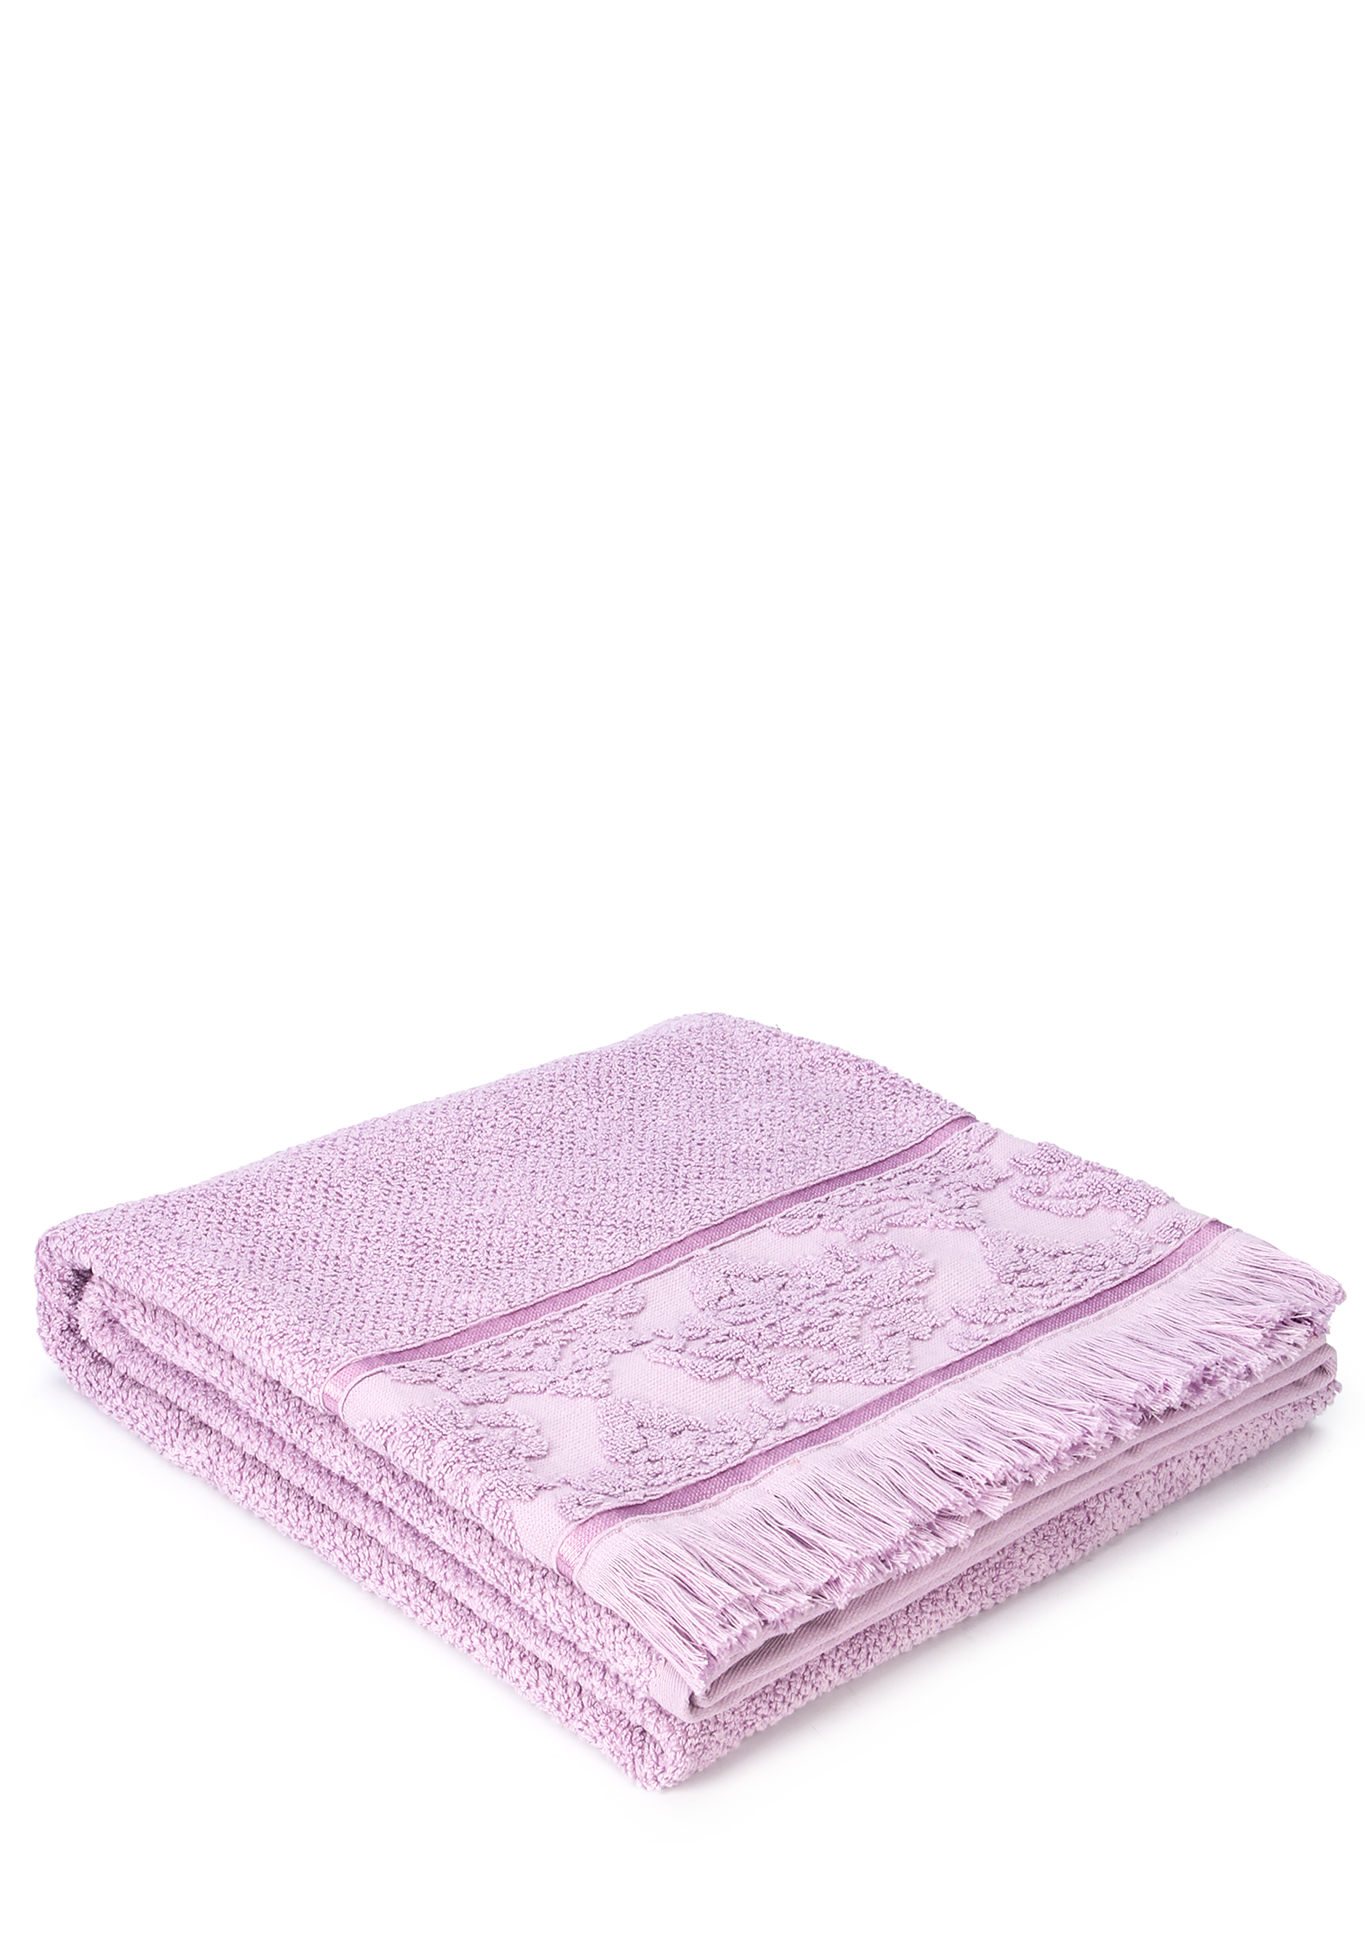 Полотенце махровое "Премиум-качество" Comfort Linе, цвет лаванда, размер 50 x 90 - фото 1